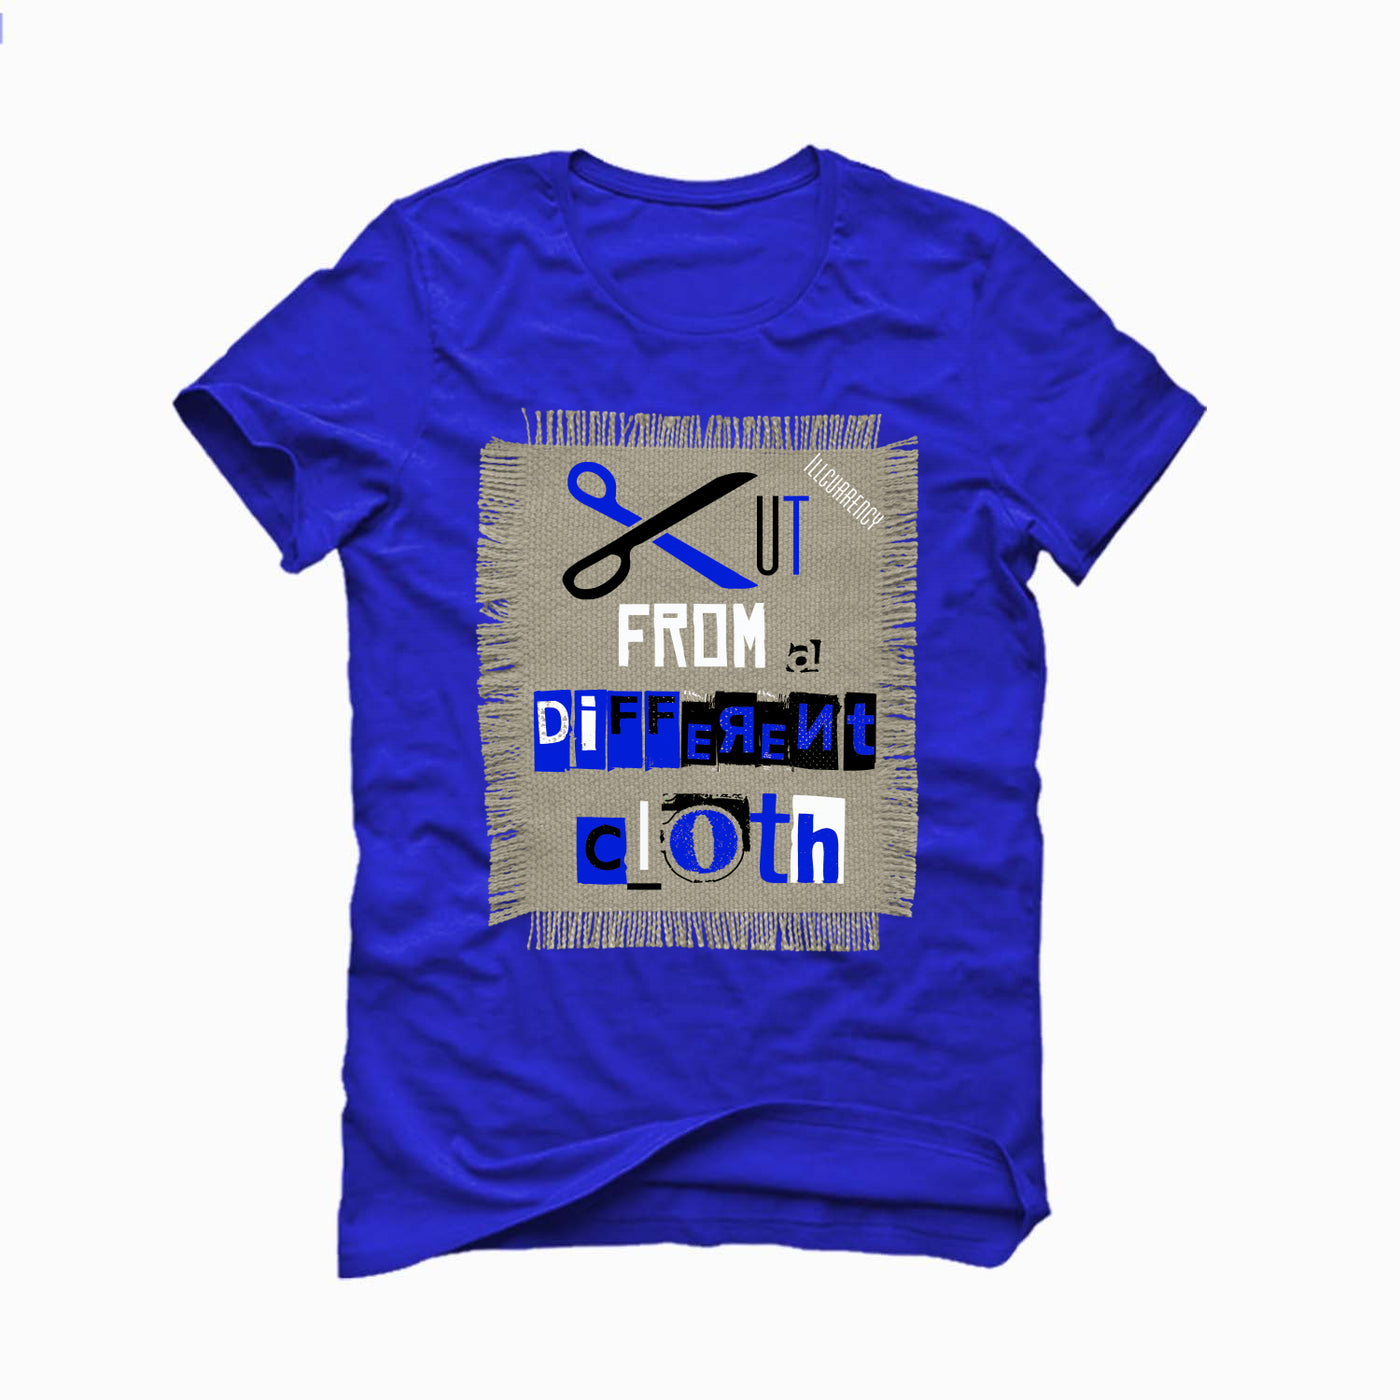 AIR JORDAN 2 LOW “VARSITY ROYAL” Royal Blue T-Shirt (Cut from a different cloth)